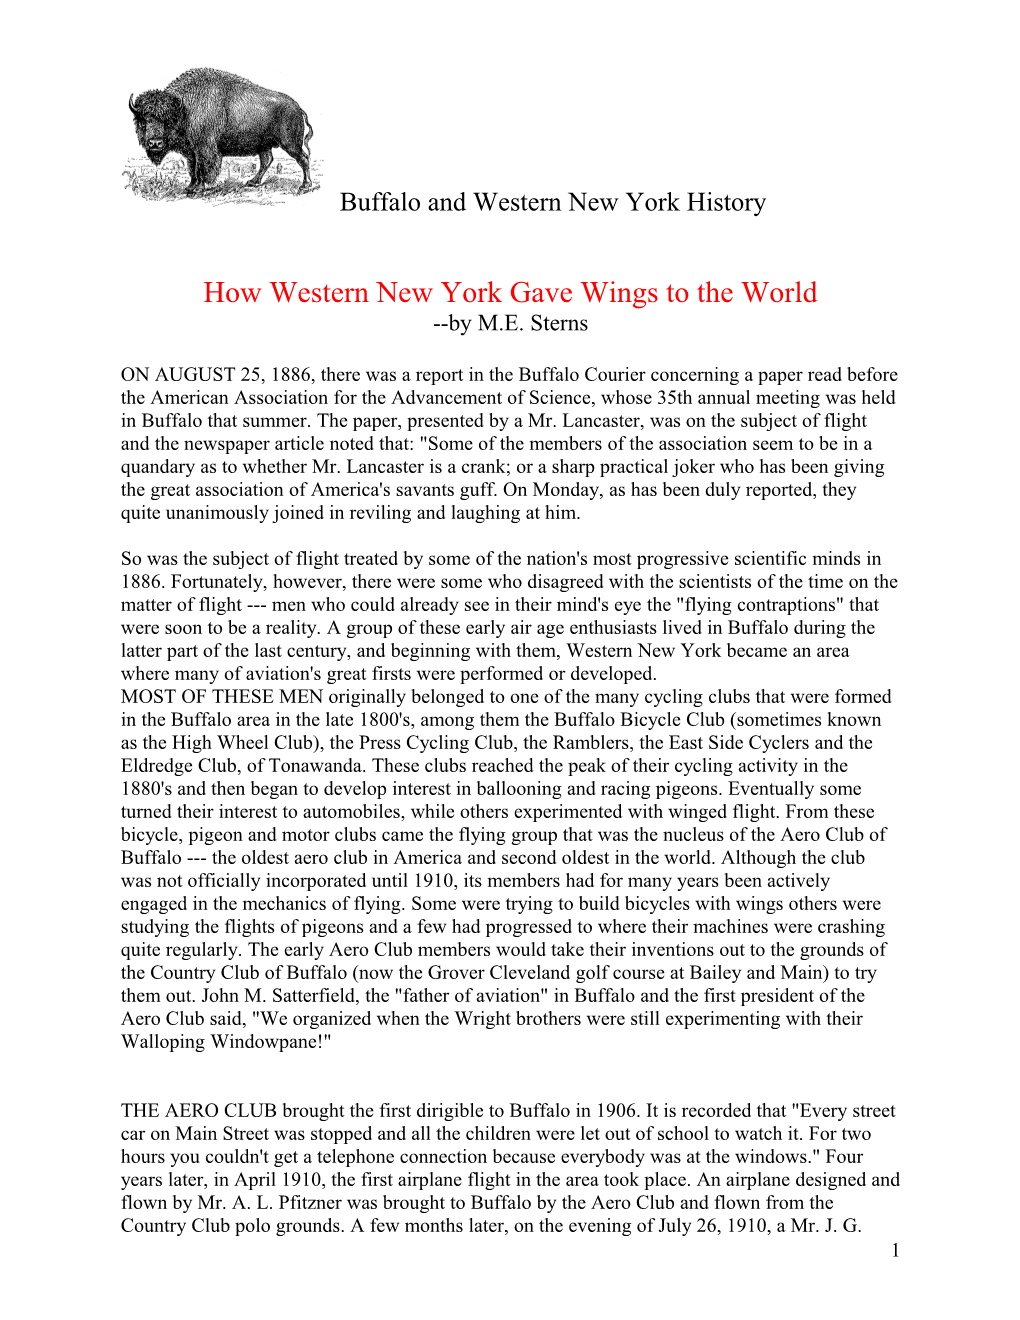 Buffalo and Western New York History s1